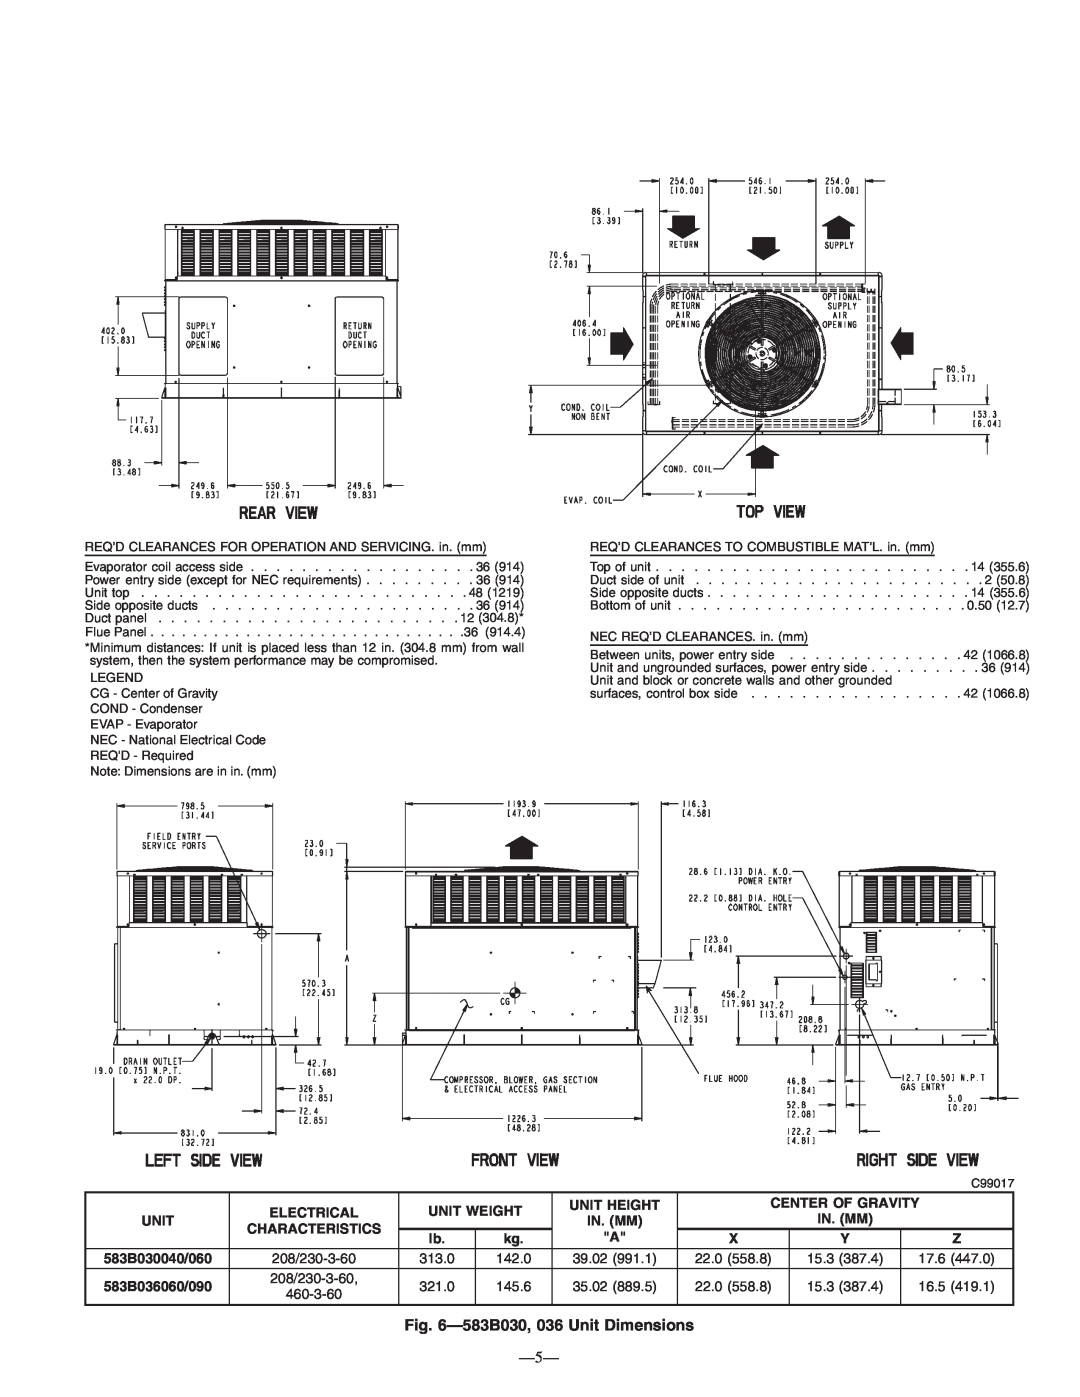 Bryant instruction manual 583B030,036 Unit Dimensions 